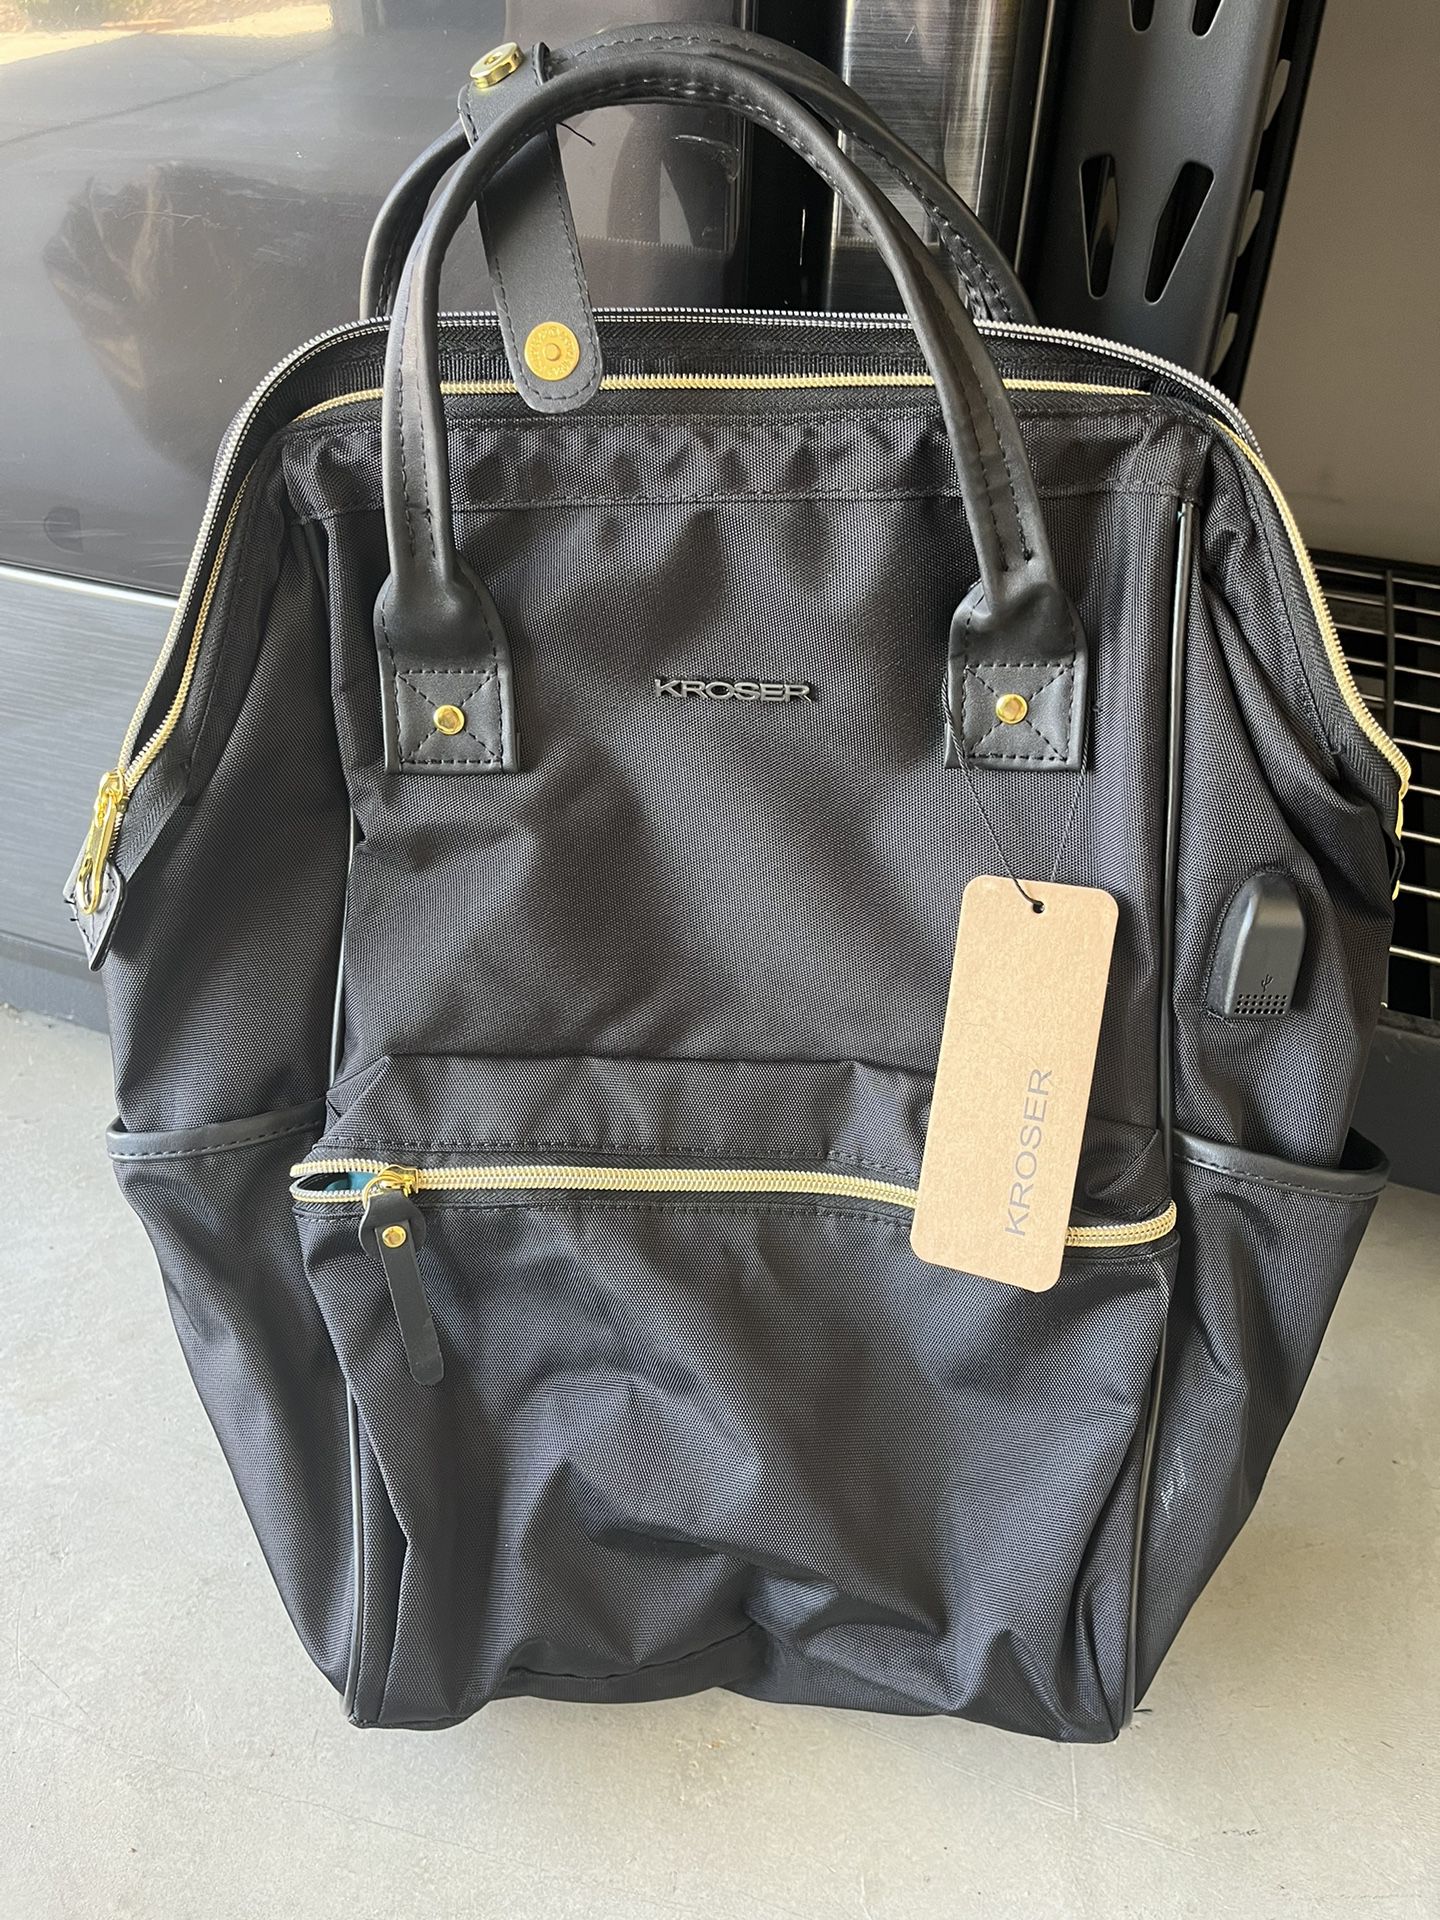 Kroser Women’s Computer Laptop Backpack